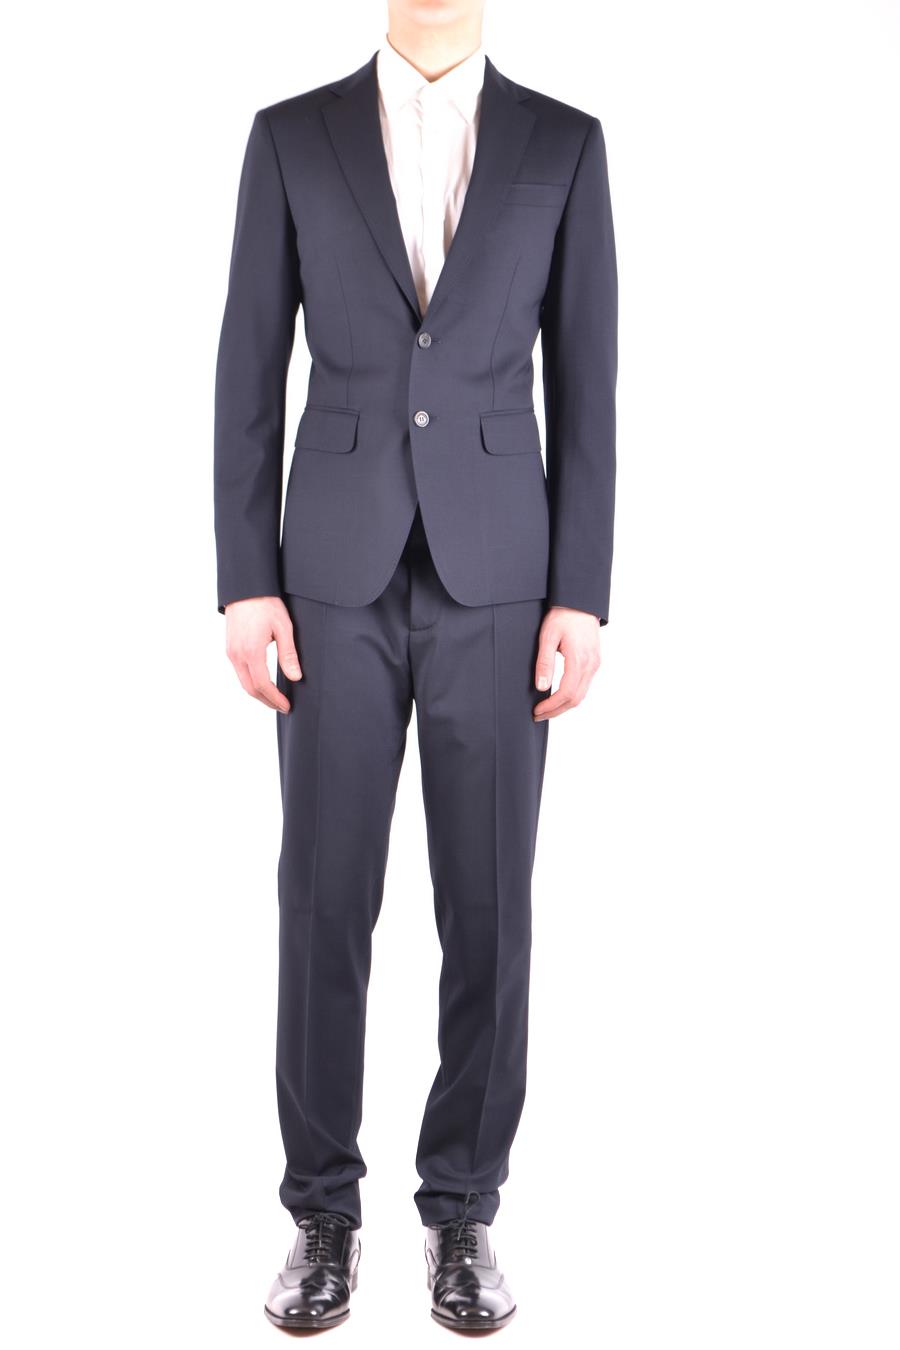 DSQUARED2 Suits | ViganoBoutique.com